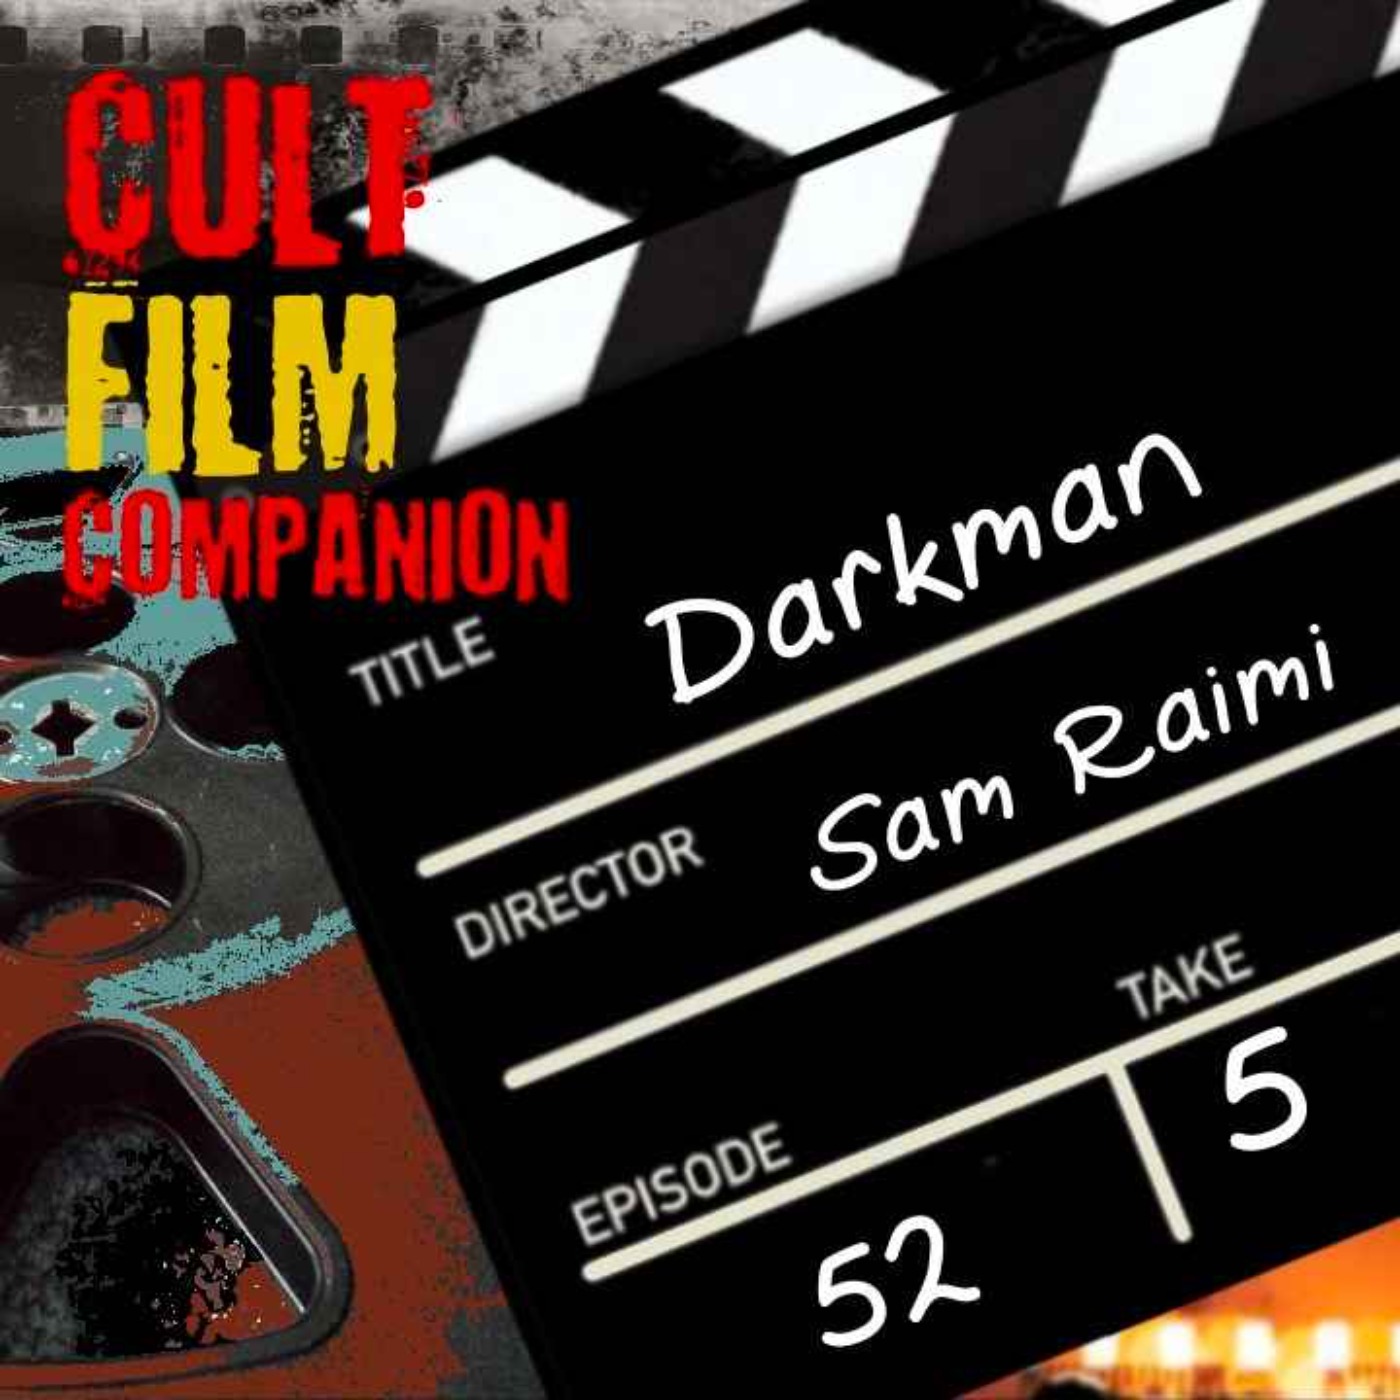 cover art for Ep. 52 Darkman directed by Sam Raimi